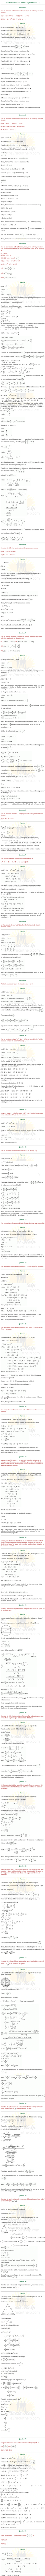 ncert solutions for class 12 Math Chapter 6 ex.6.5